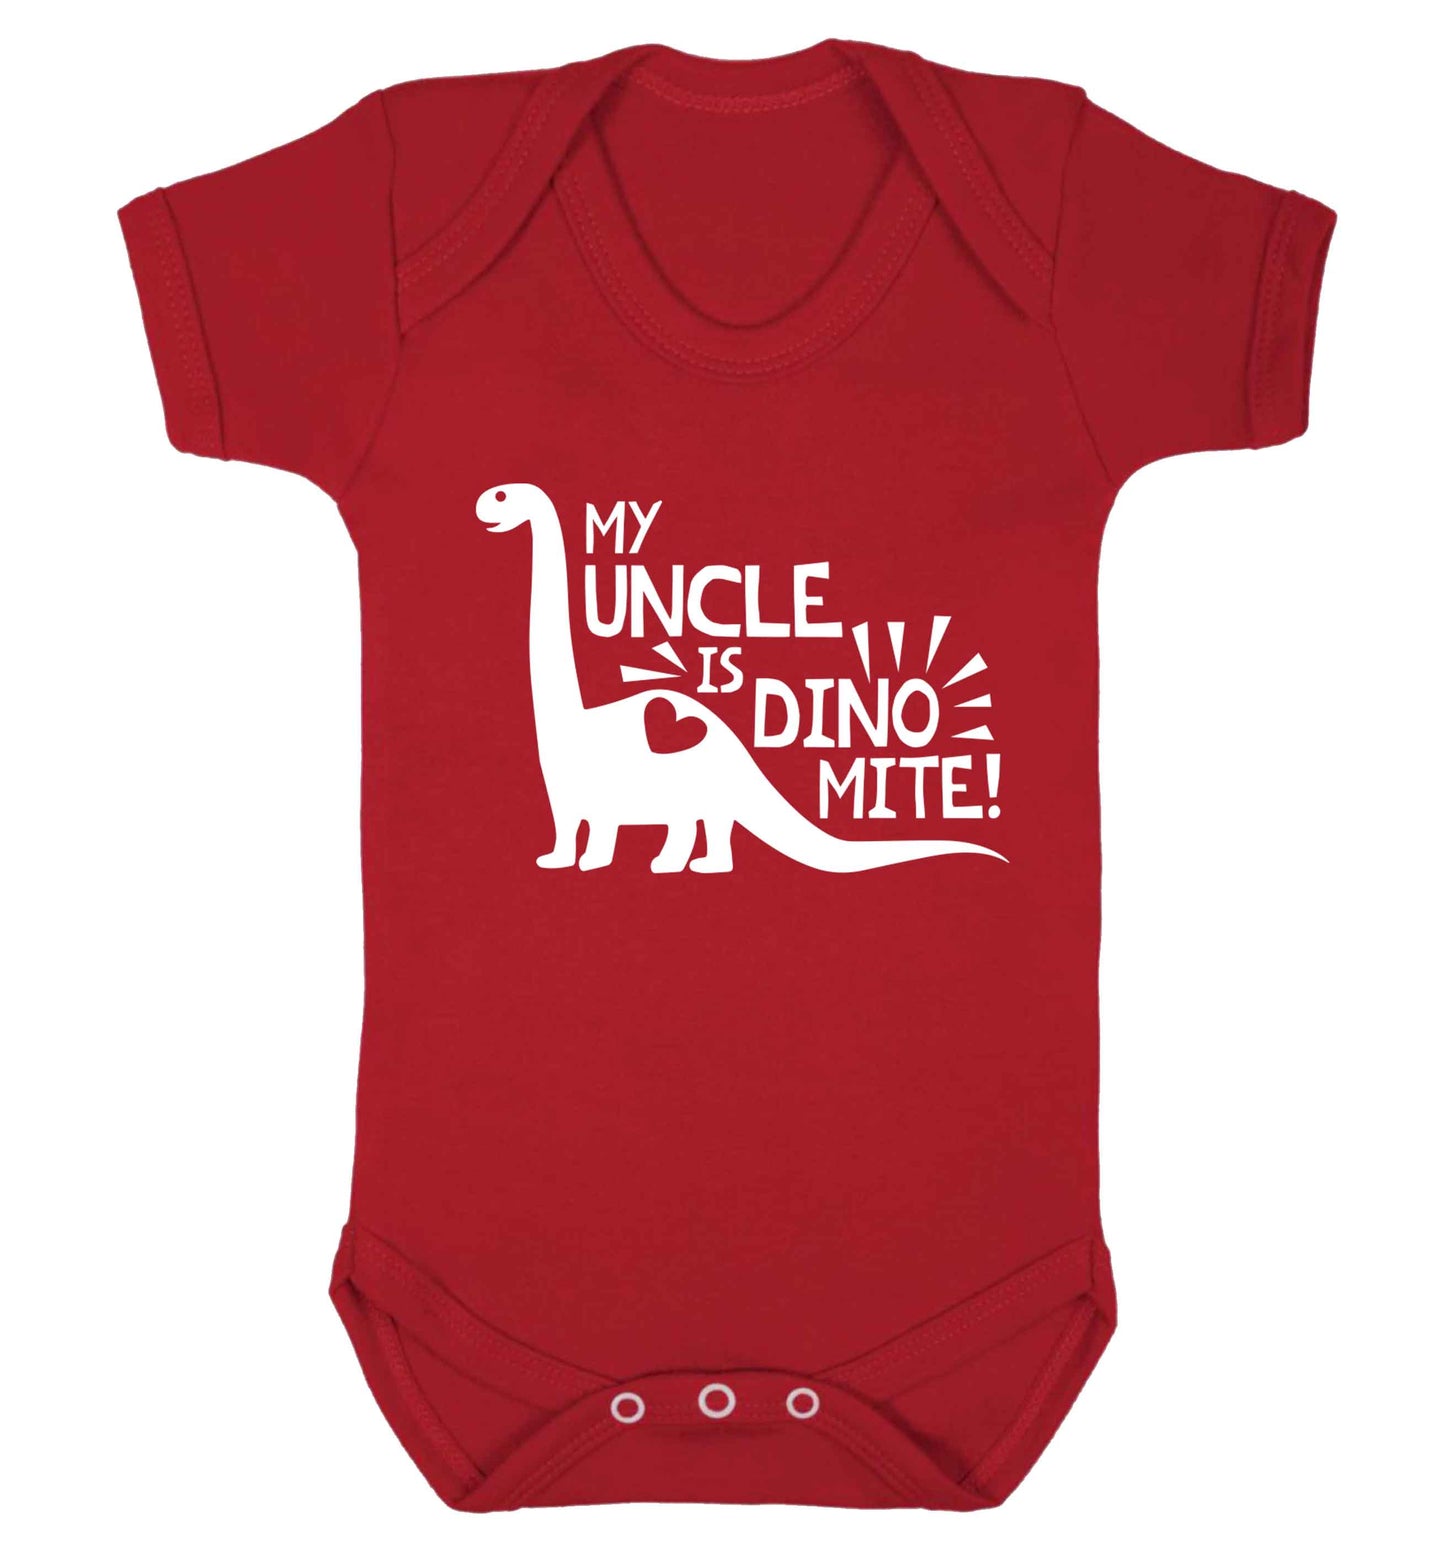 My uncle is dinomite! Baby Vest red 18-24 months